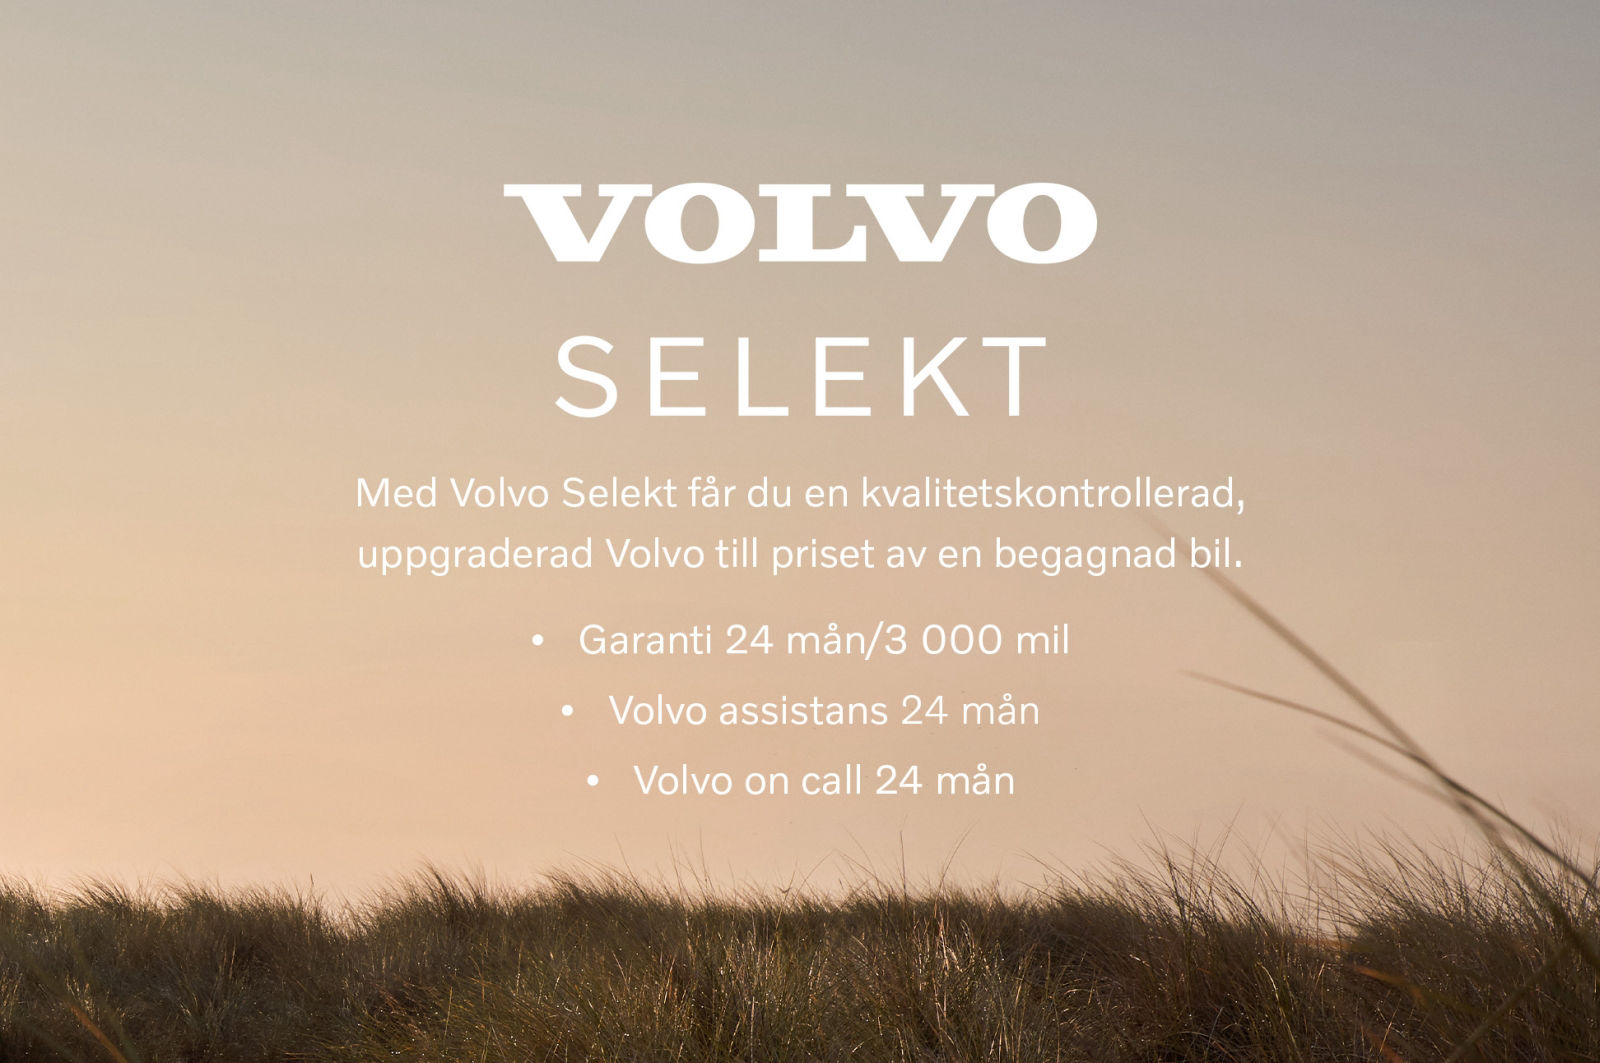 Volvo XC40 Recharge Single Motor Extended Range